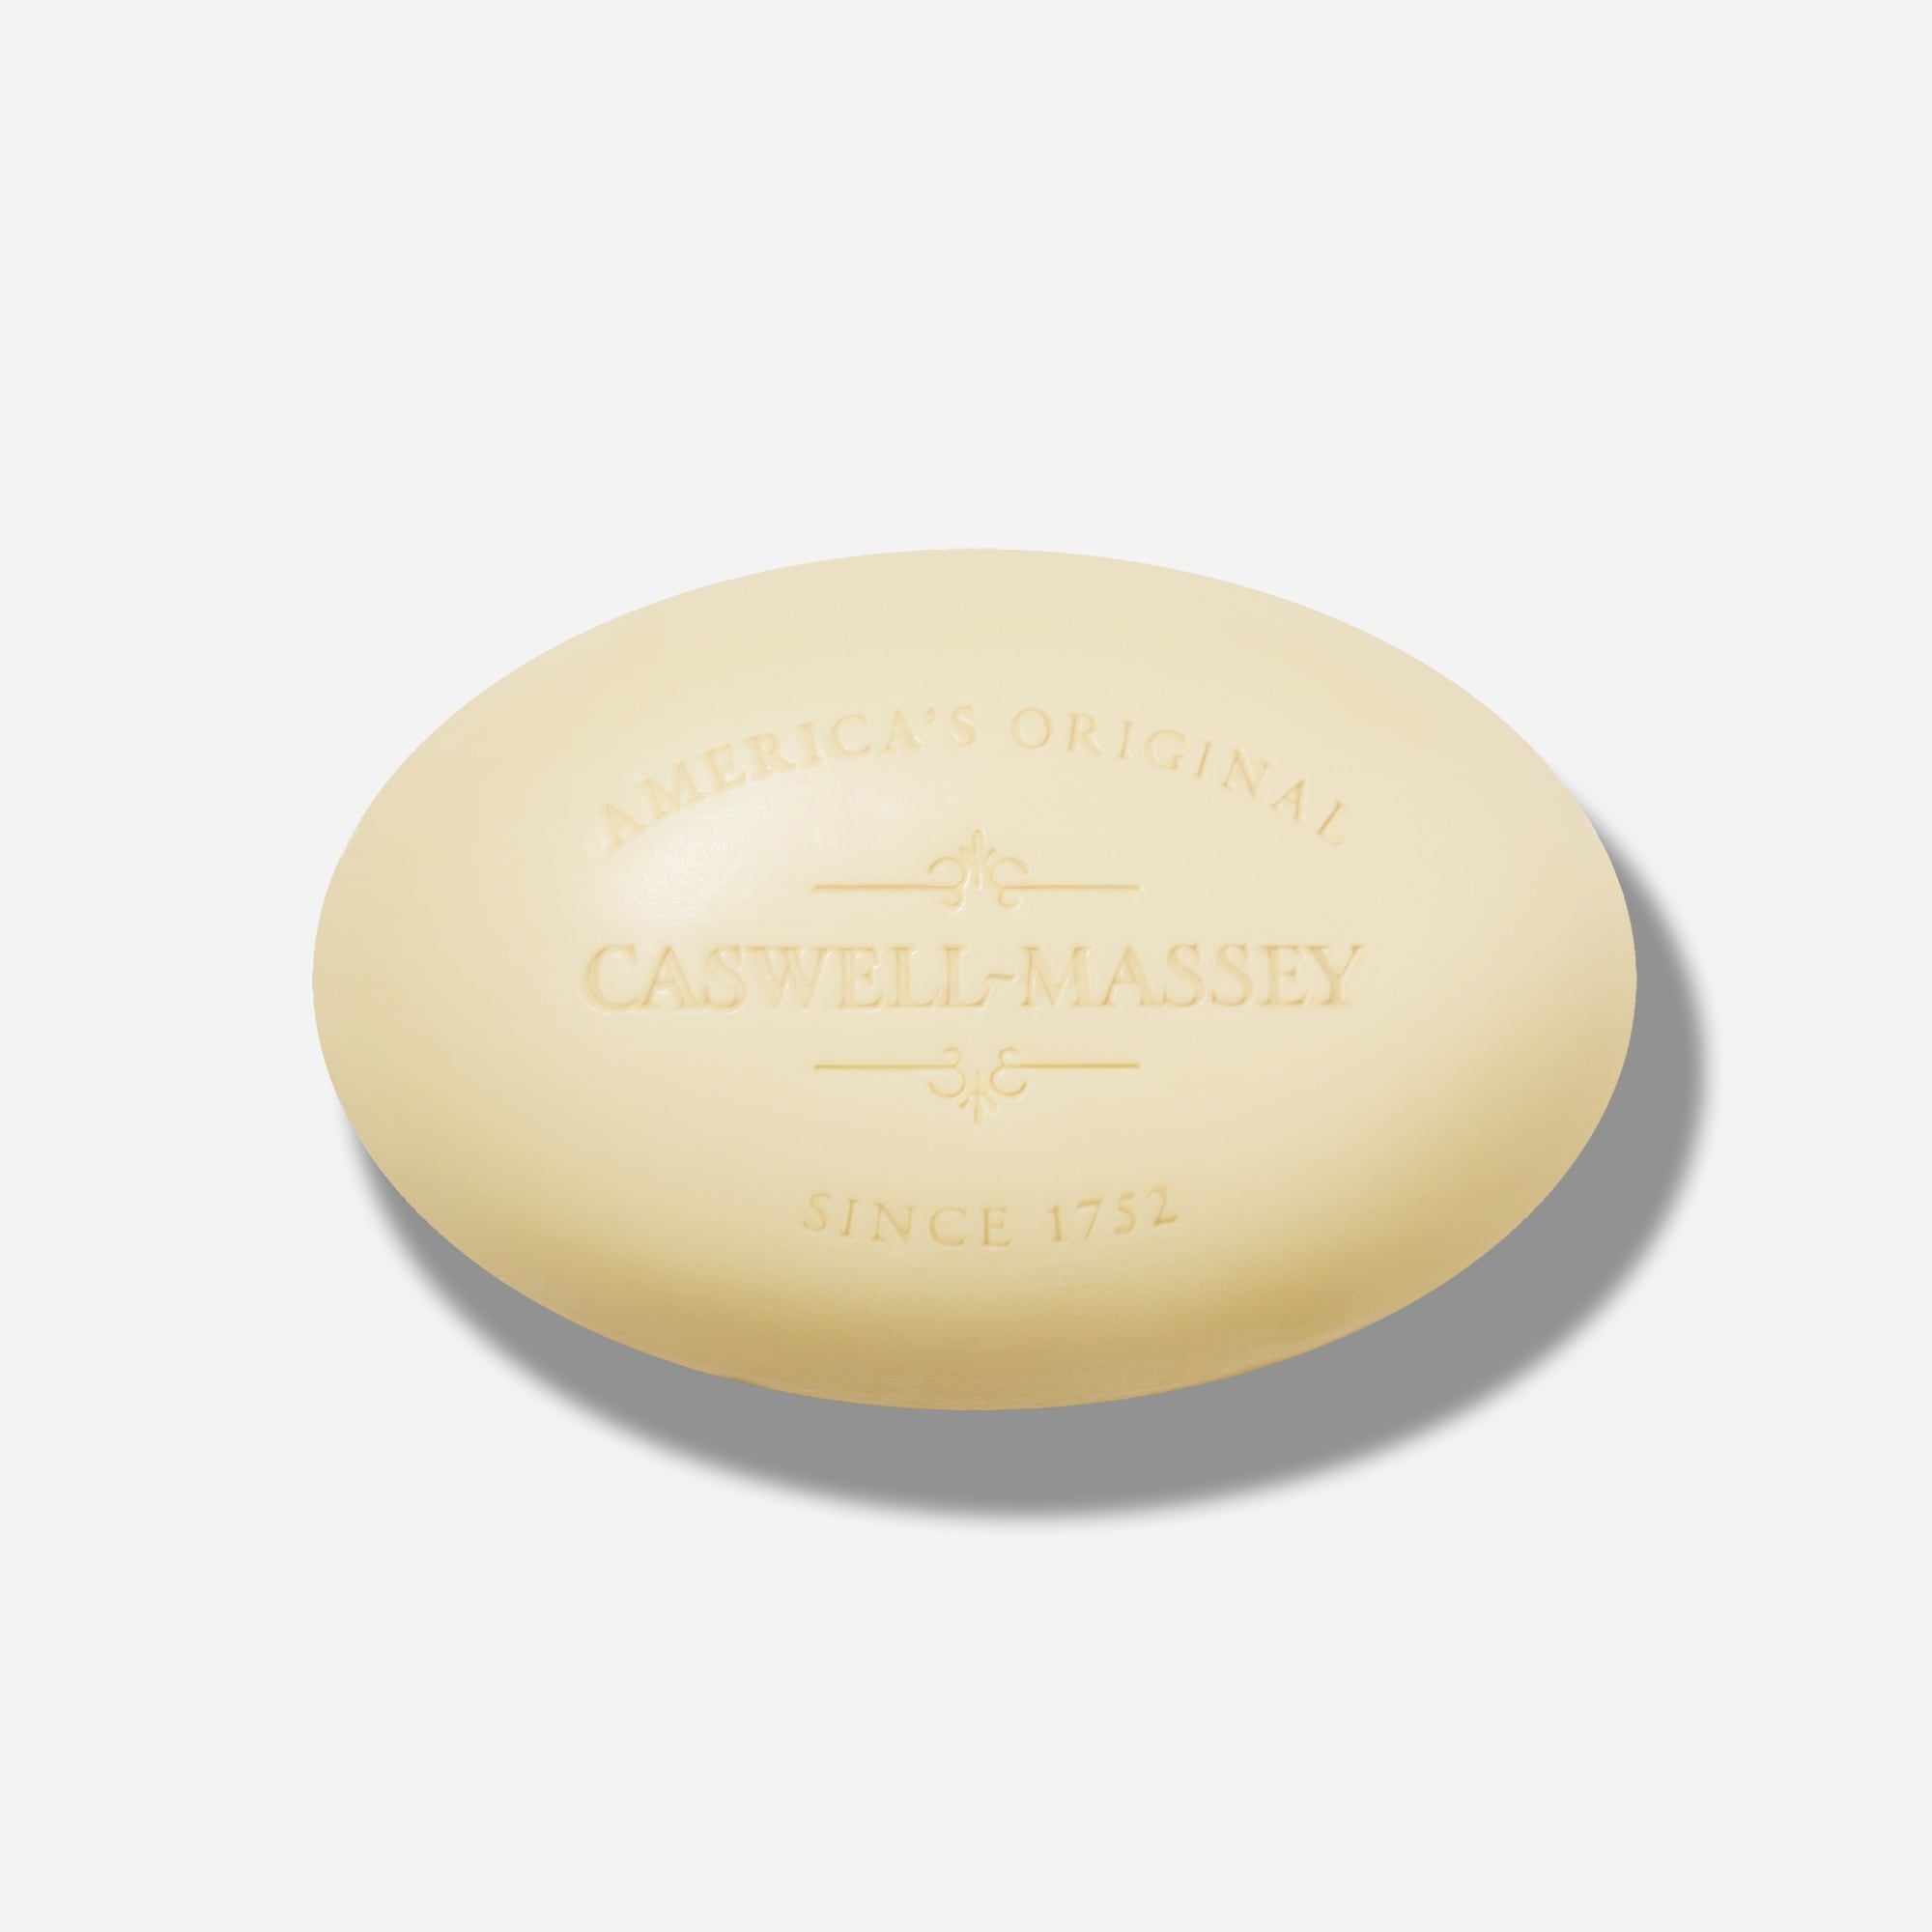 Jcrew Caswell-Massey number six bar soap